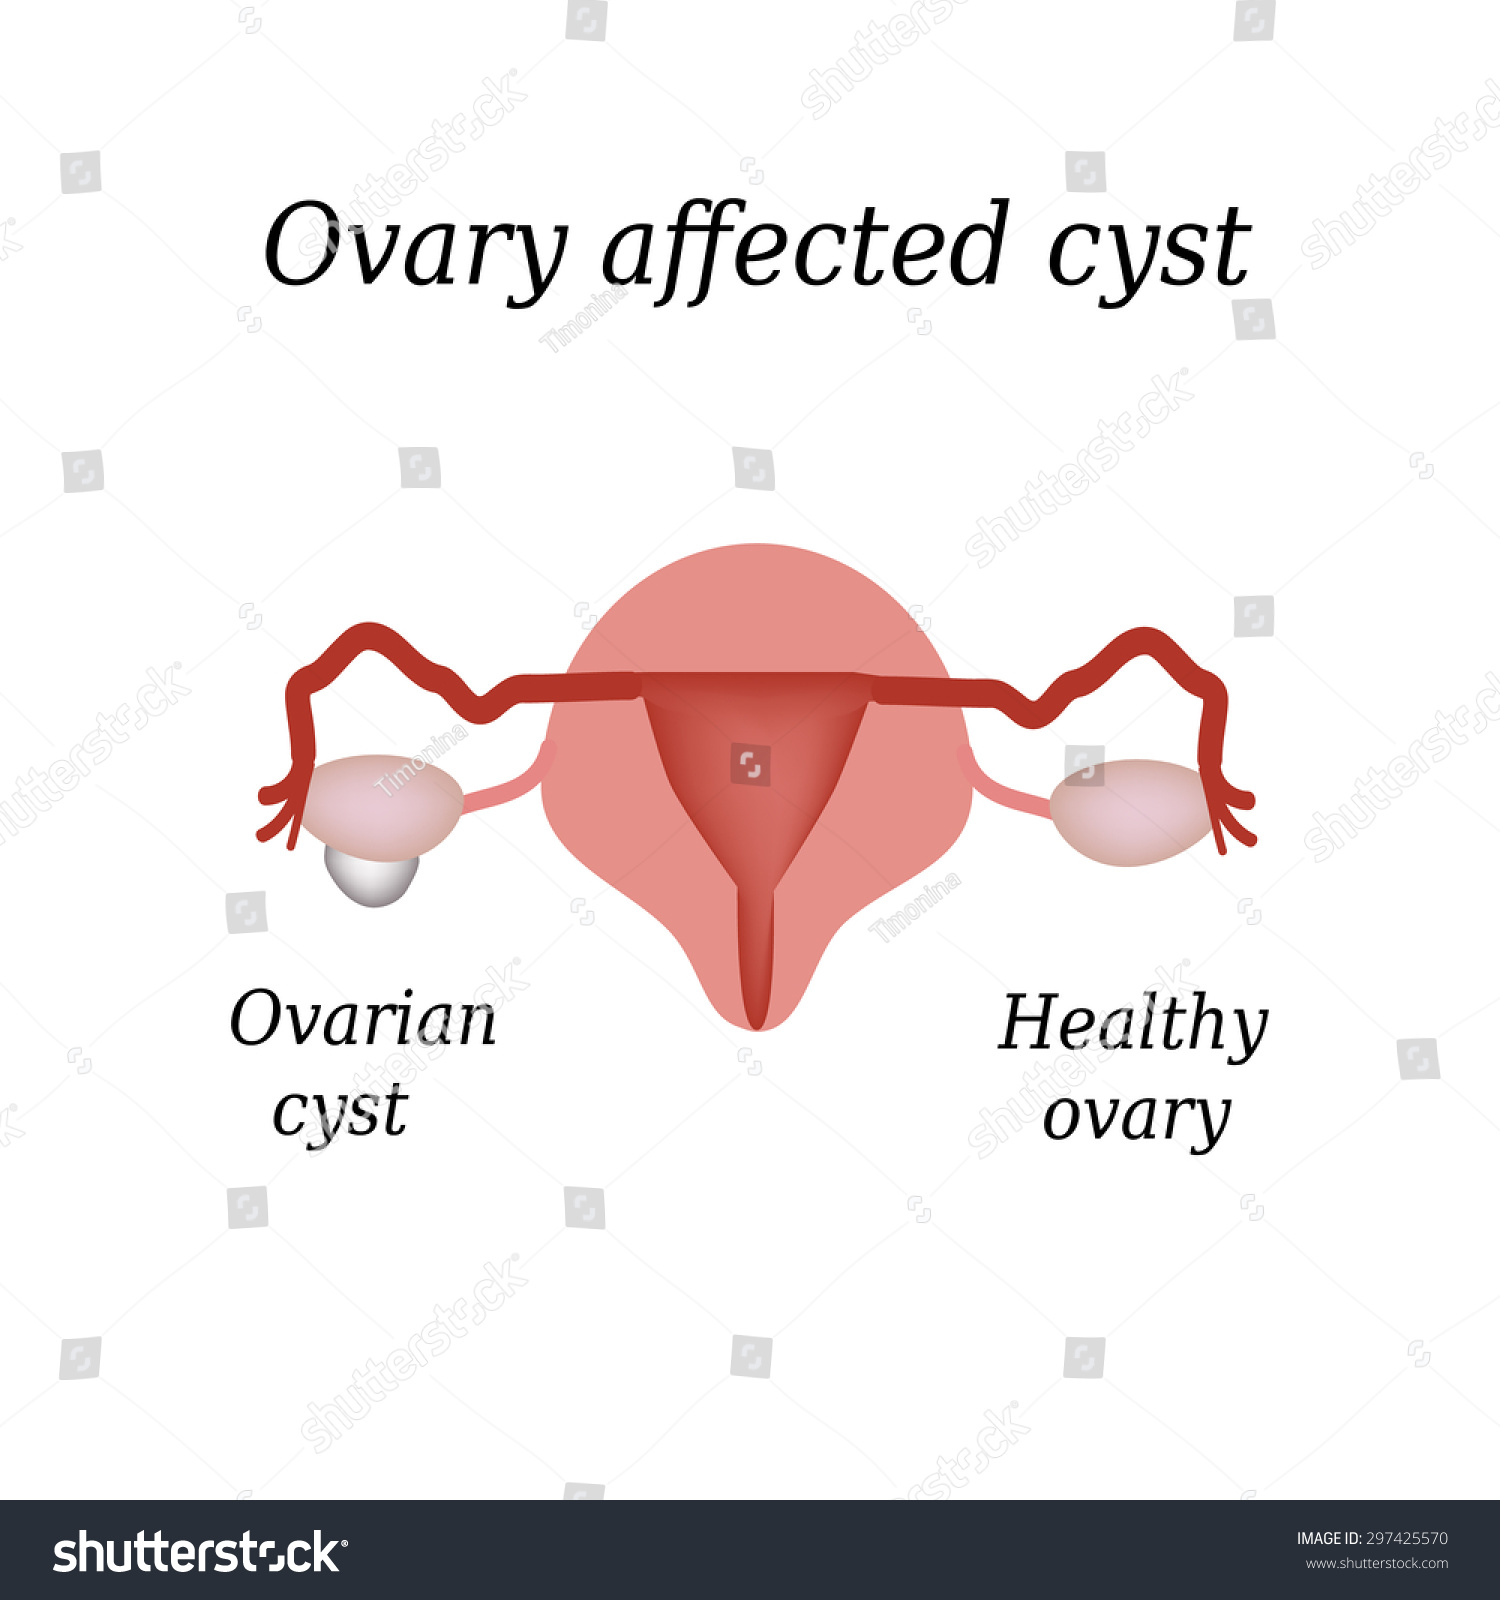 Cyst Ovary Pelvic Organs Stock Illustration 297425570 | Shutterstock